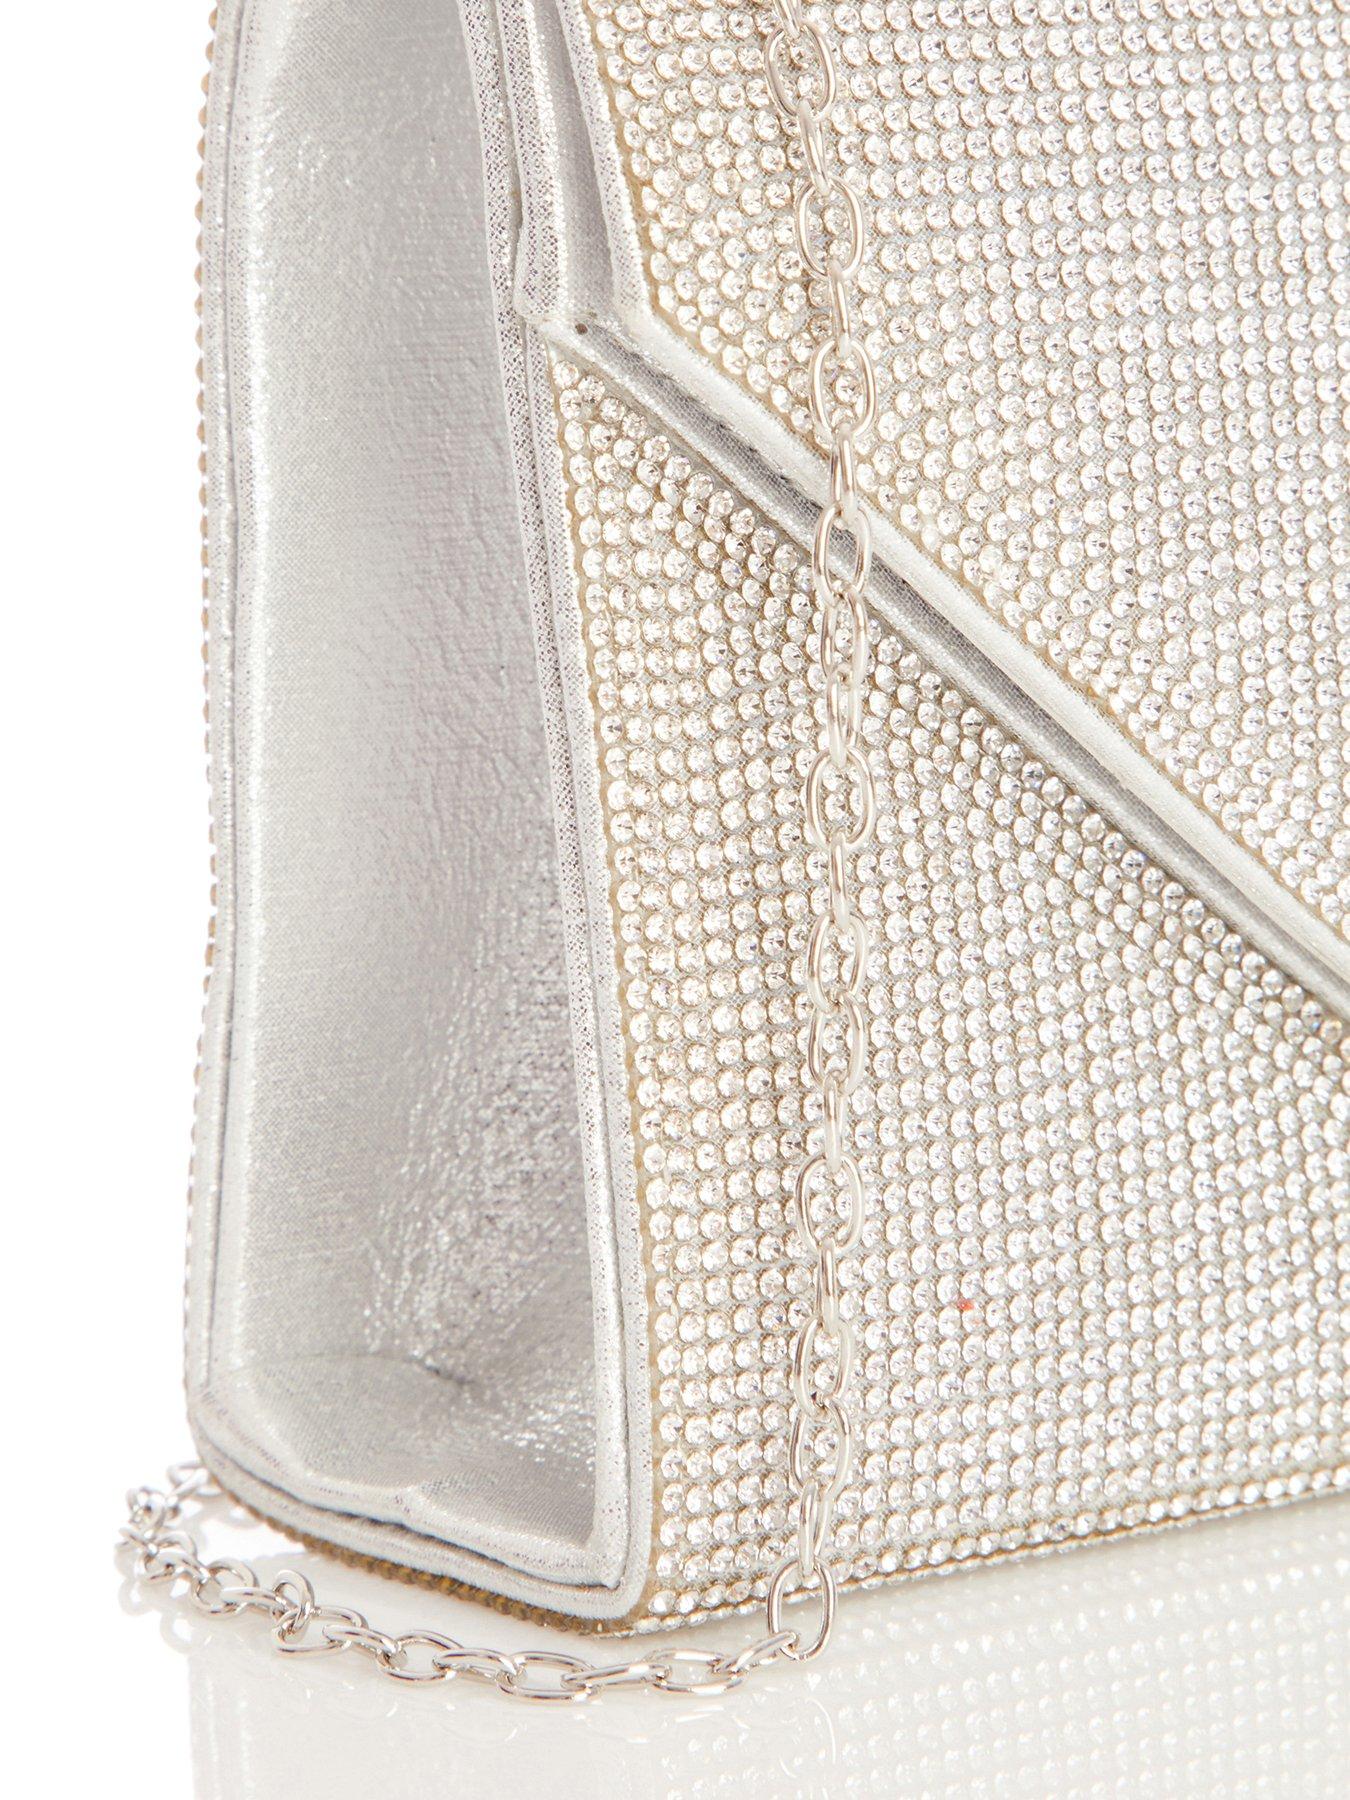 Bags & Purses Diamante Clutch Bag - Bright Silver